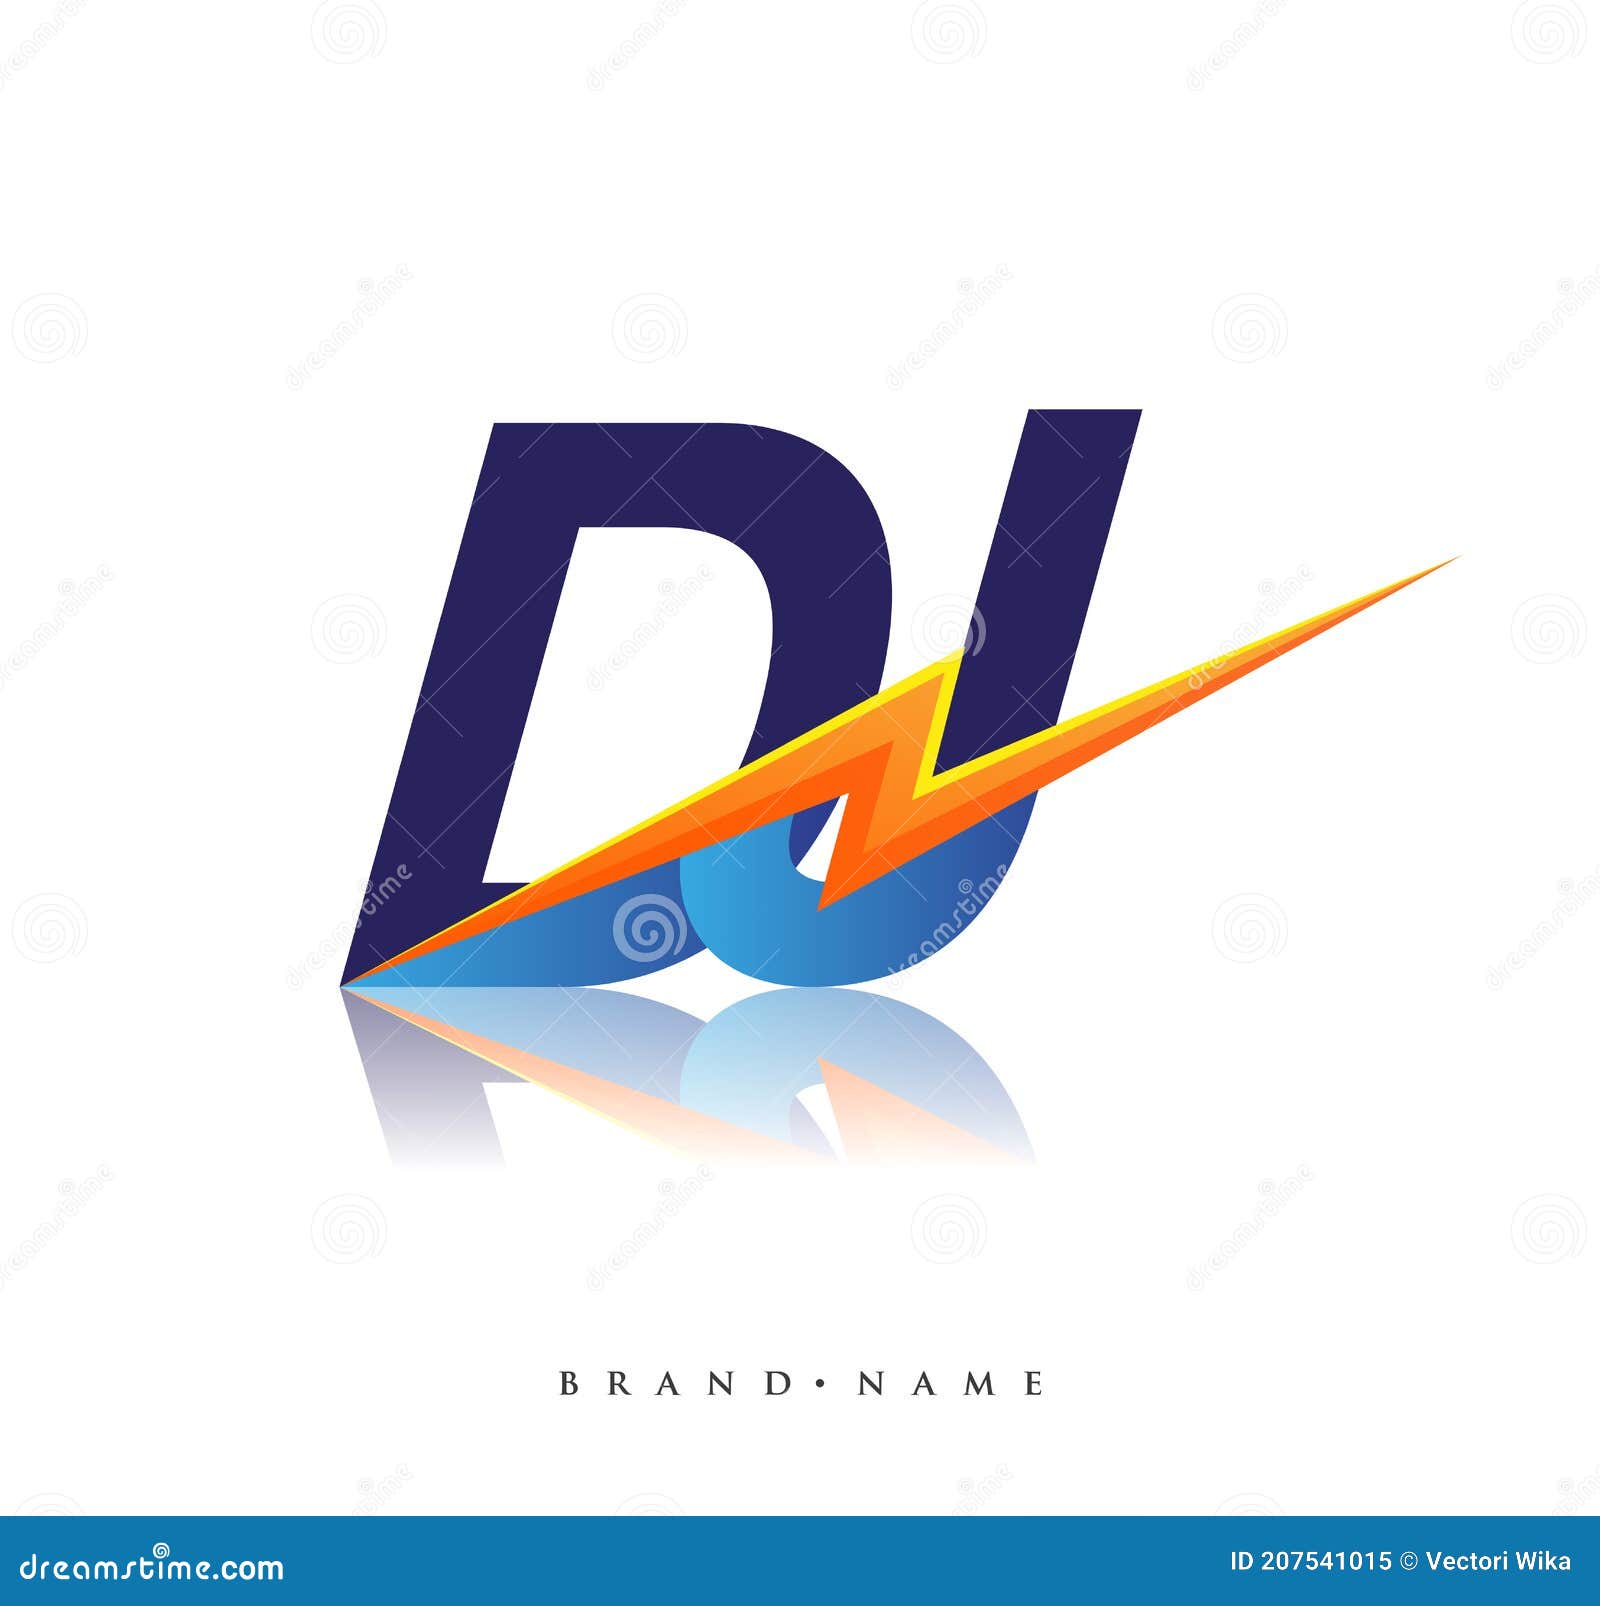 dj logos ideas